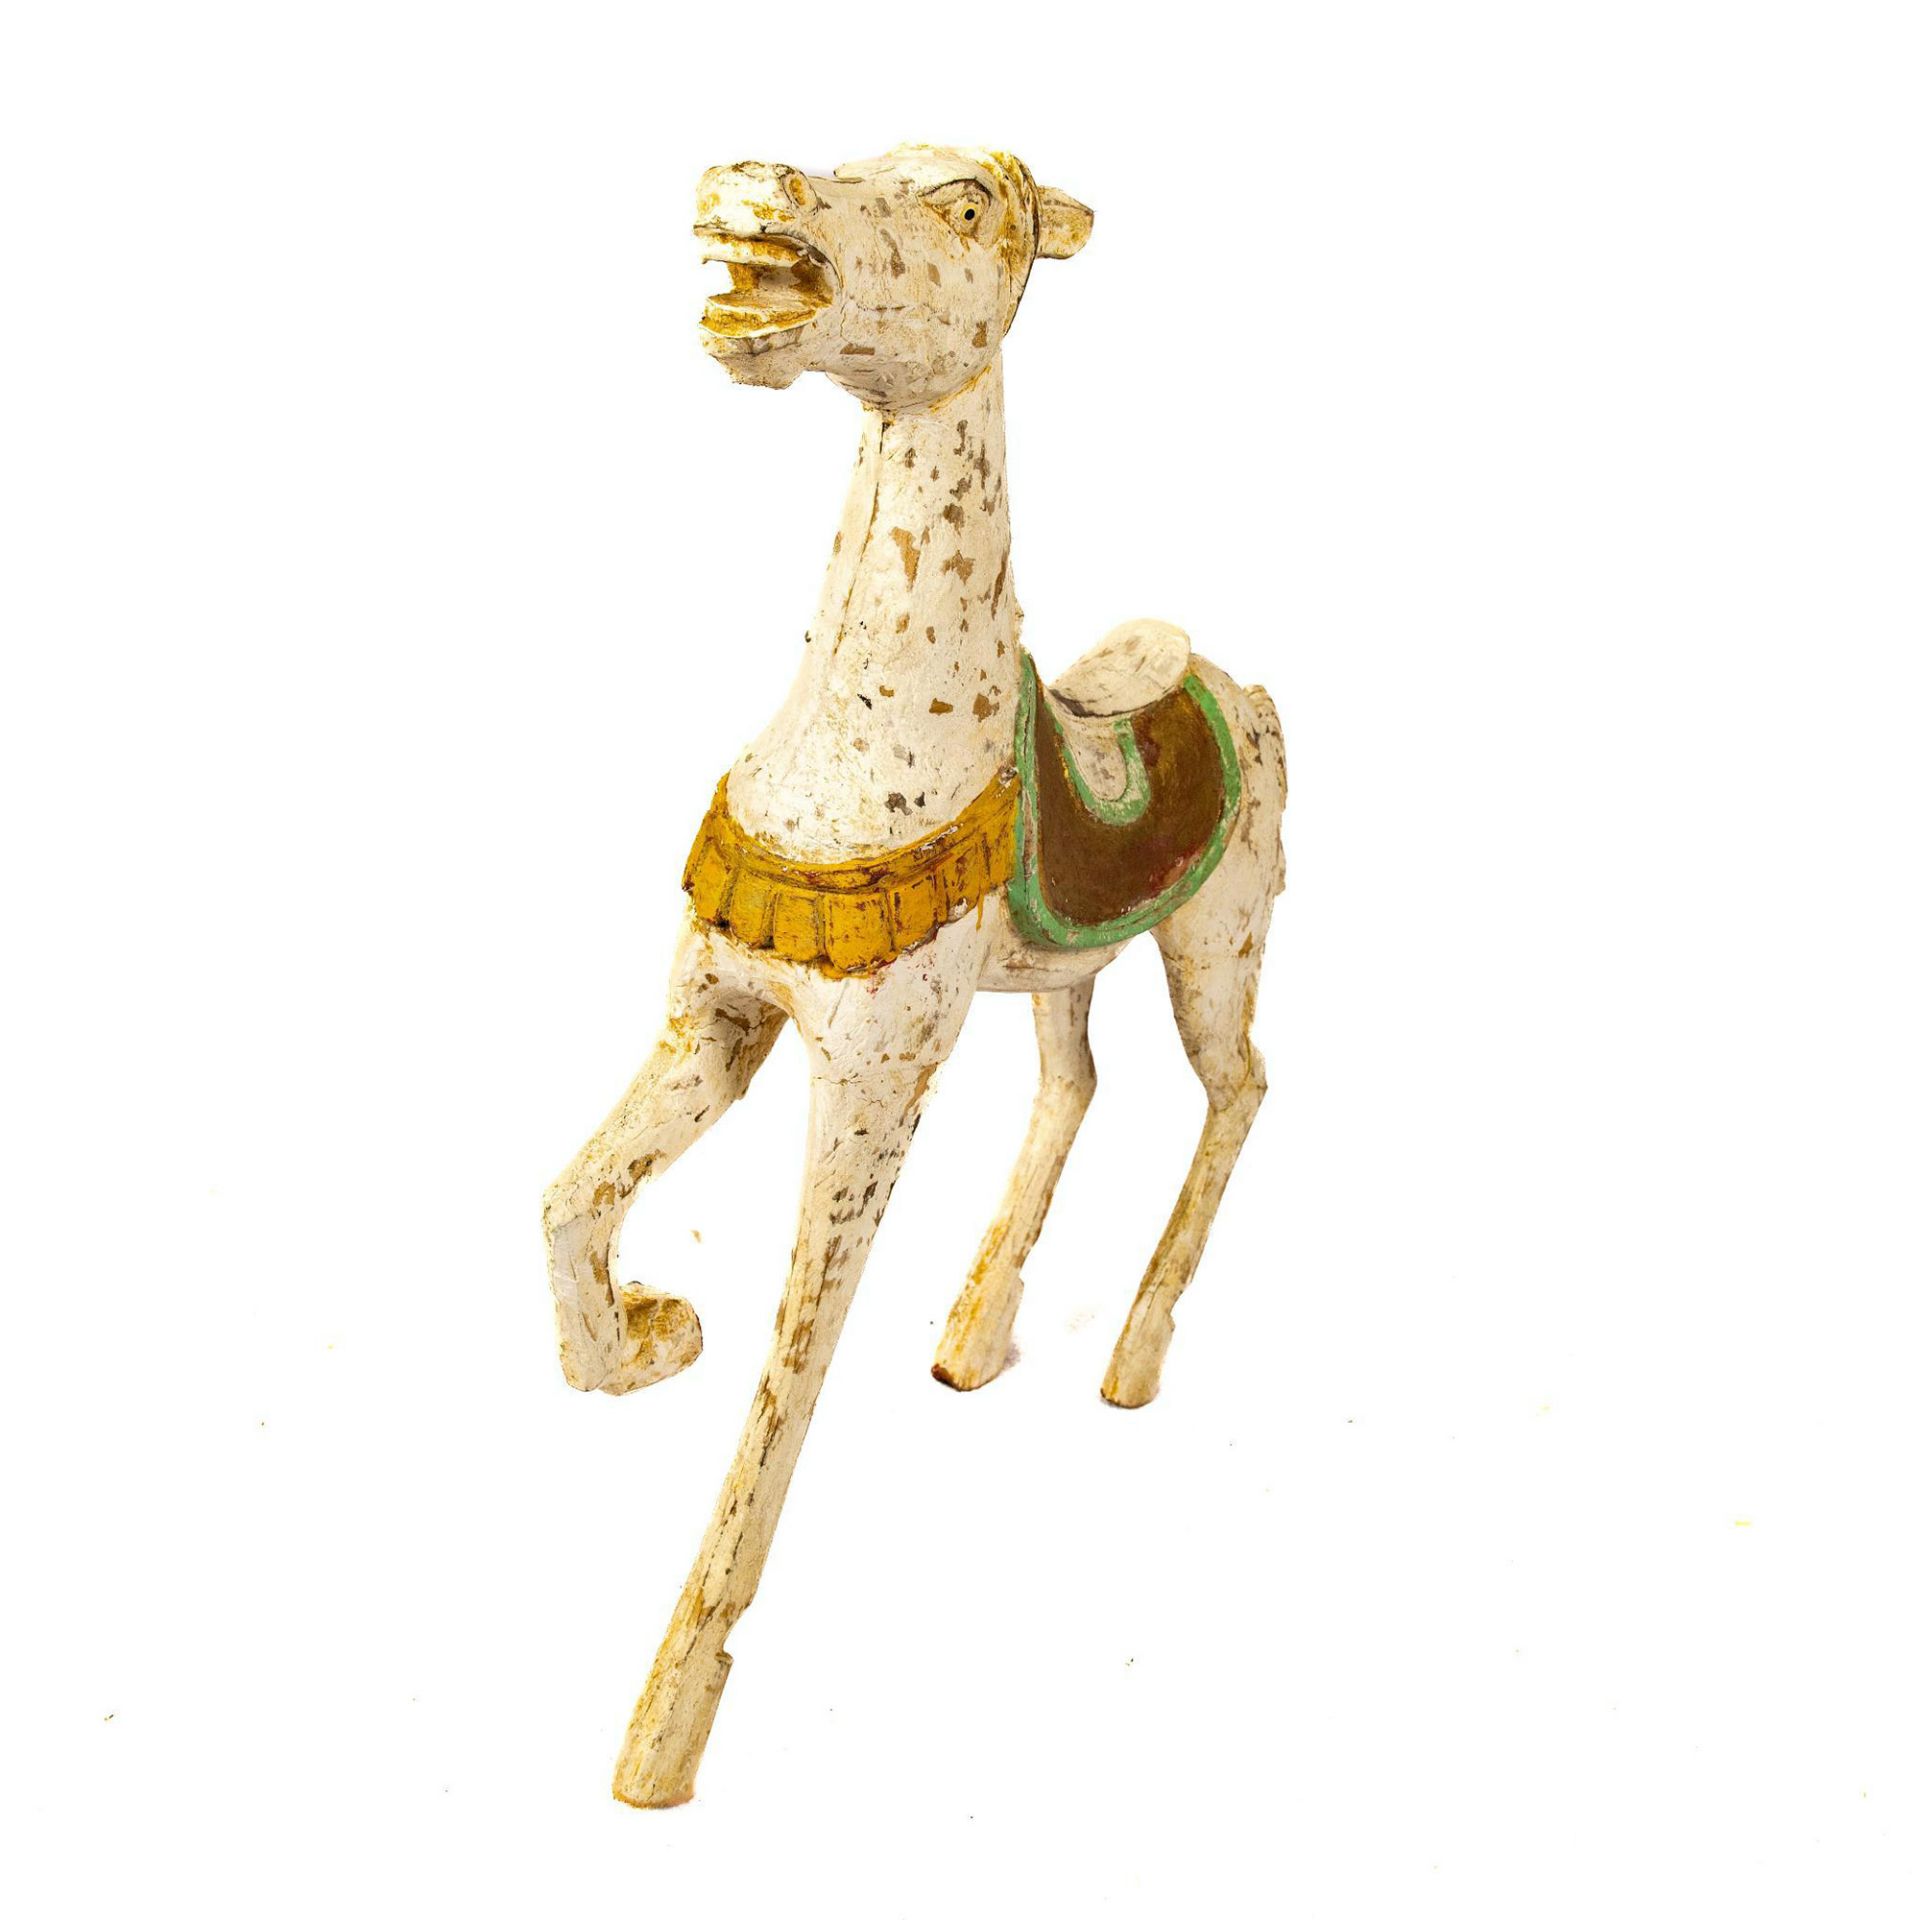 Painted Wood Decorative Horse - Image 3 of 4